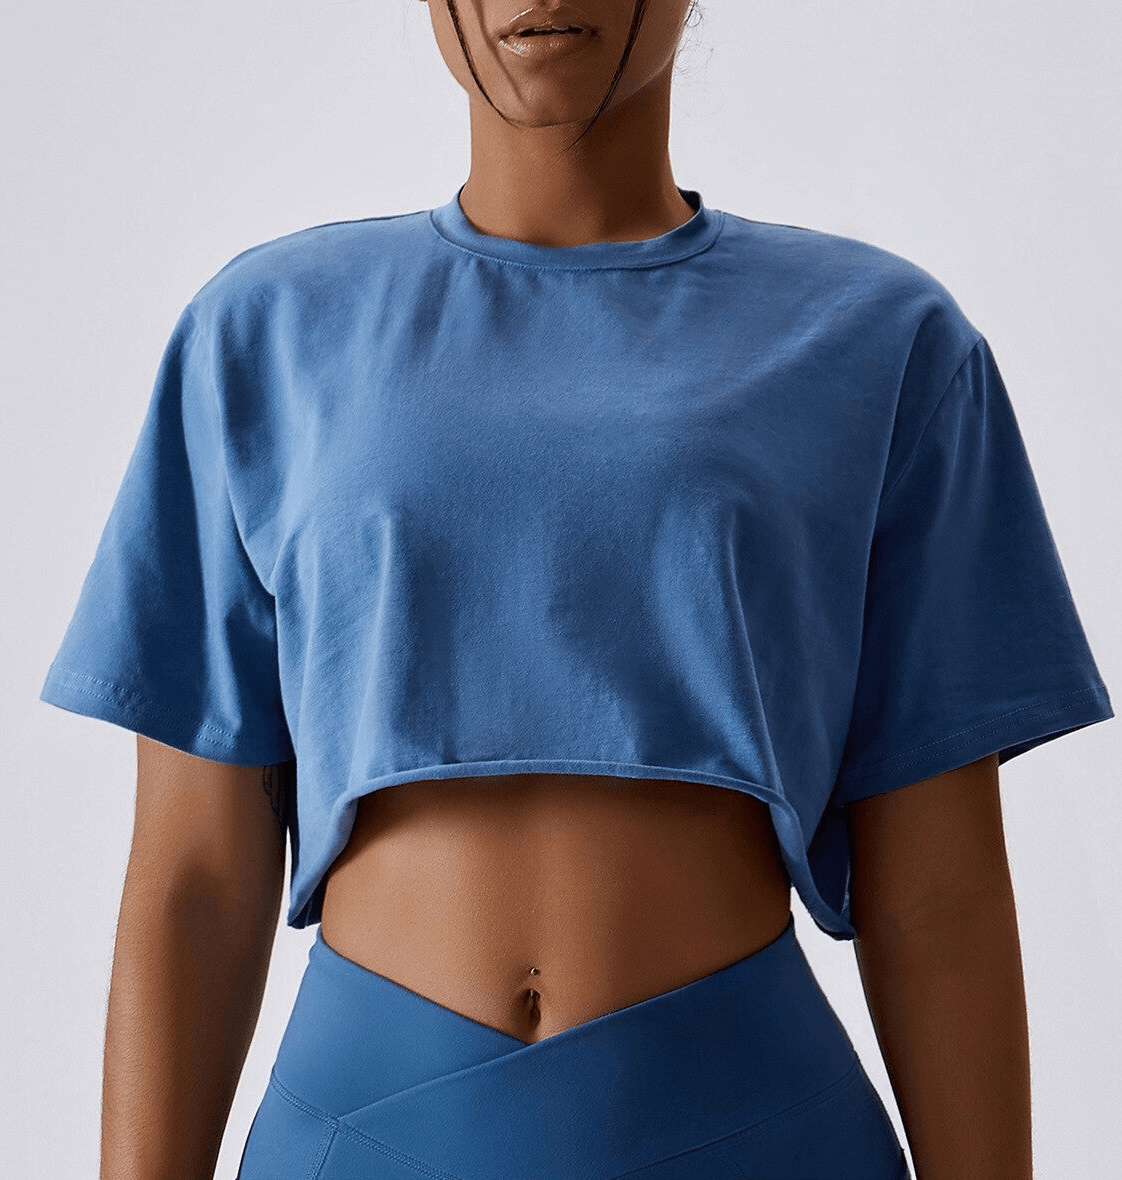 Sports Loose Crop Top for Women / Training Running O-Neck T-shirt - SF0042